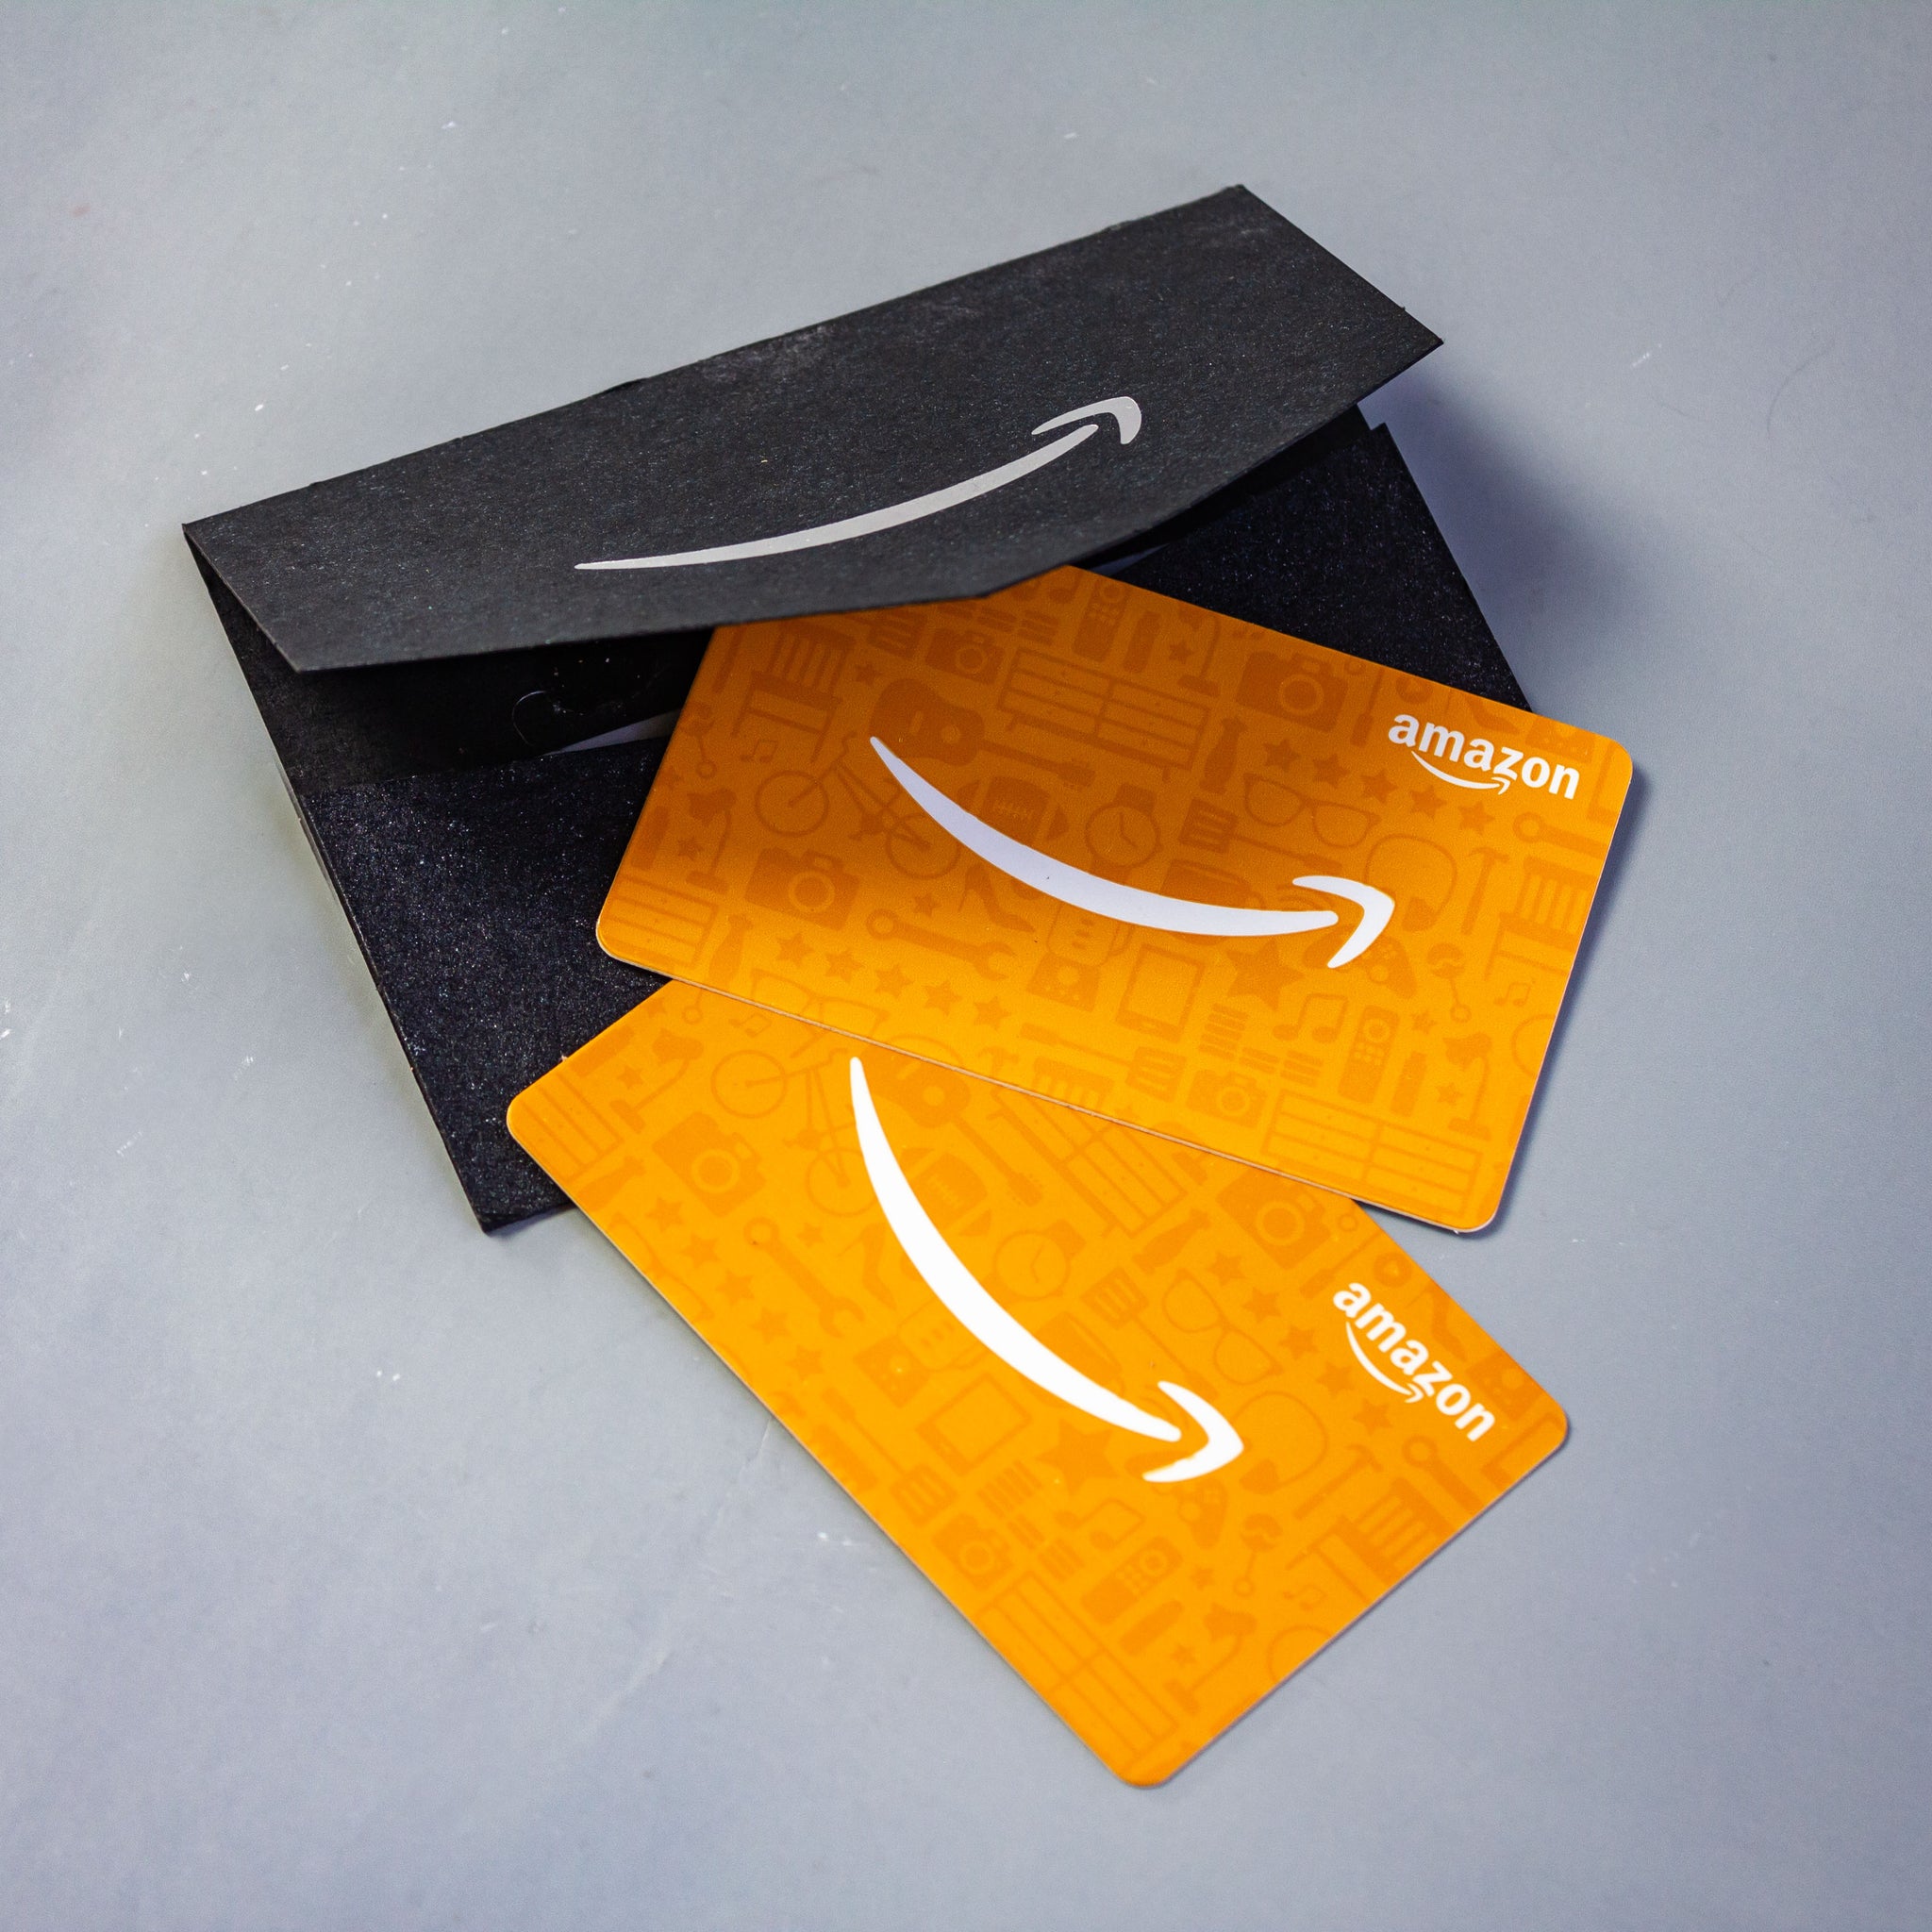 Community Forums - Missing Option to Redeem Amazon Gift Card - Verizon  Community